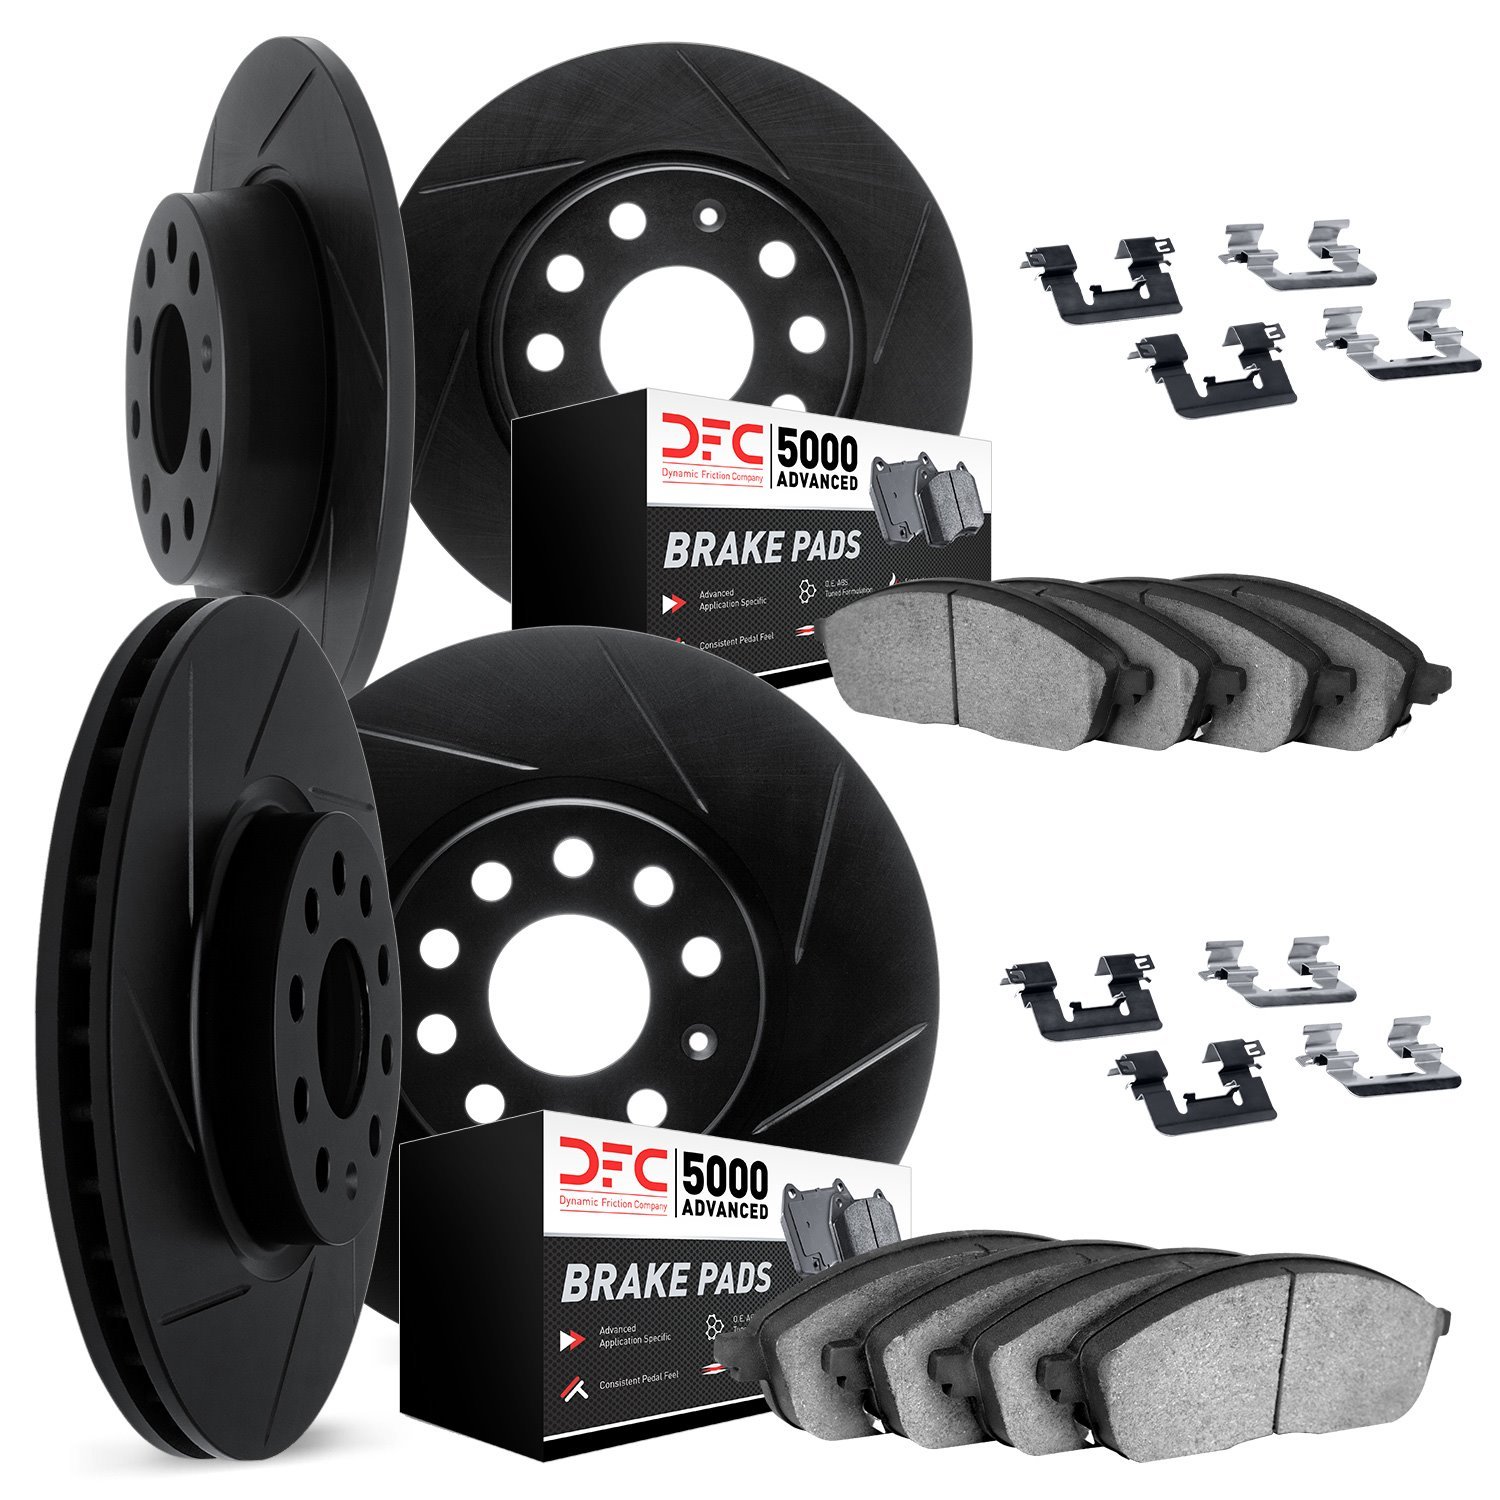 3514-42010 Slotted Brake Rotors w/5000 Advanced Brake Pads Kit & Hardware [Black], 2007-2012 Mopar, Position: Front and Rear